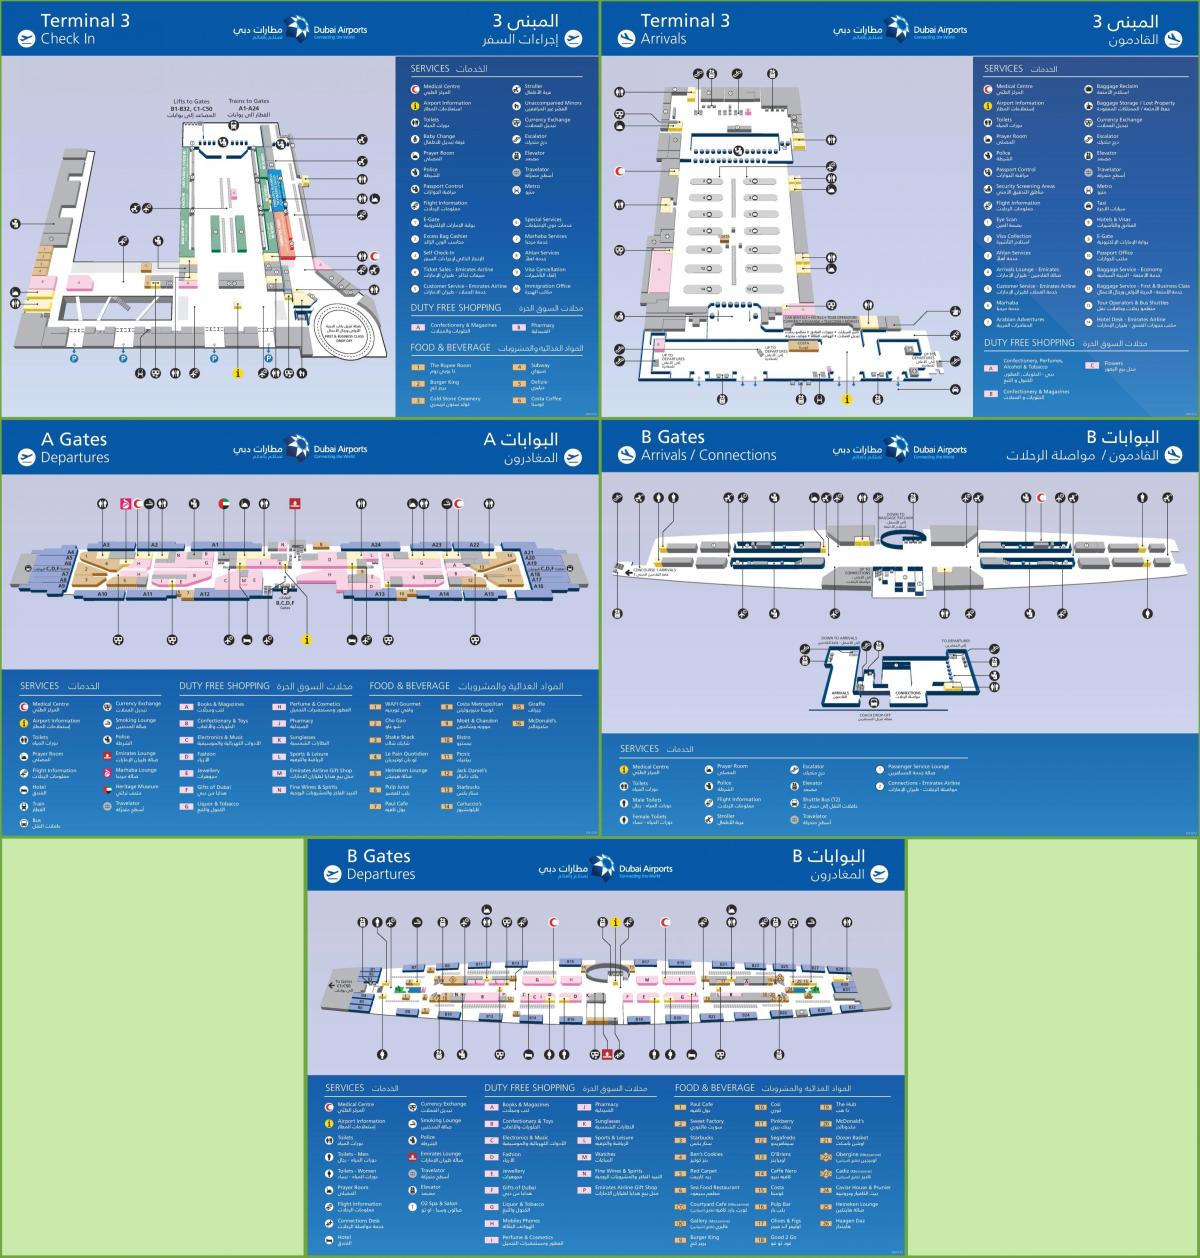 терминал 3 аэропорта Дубая карте